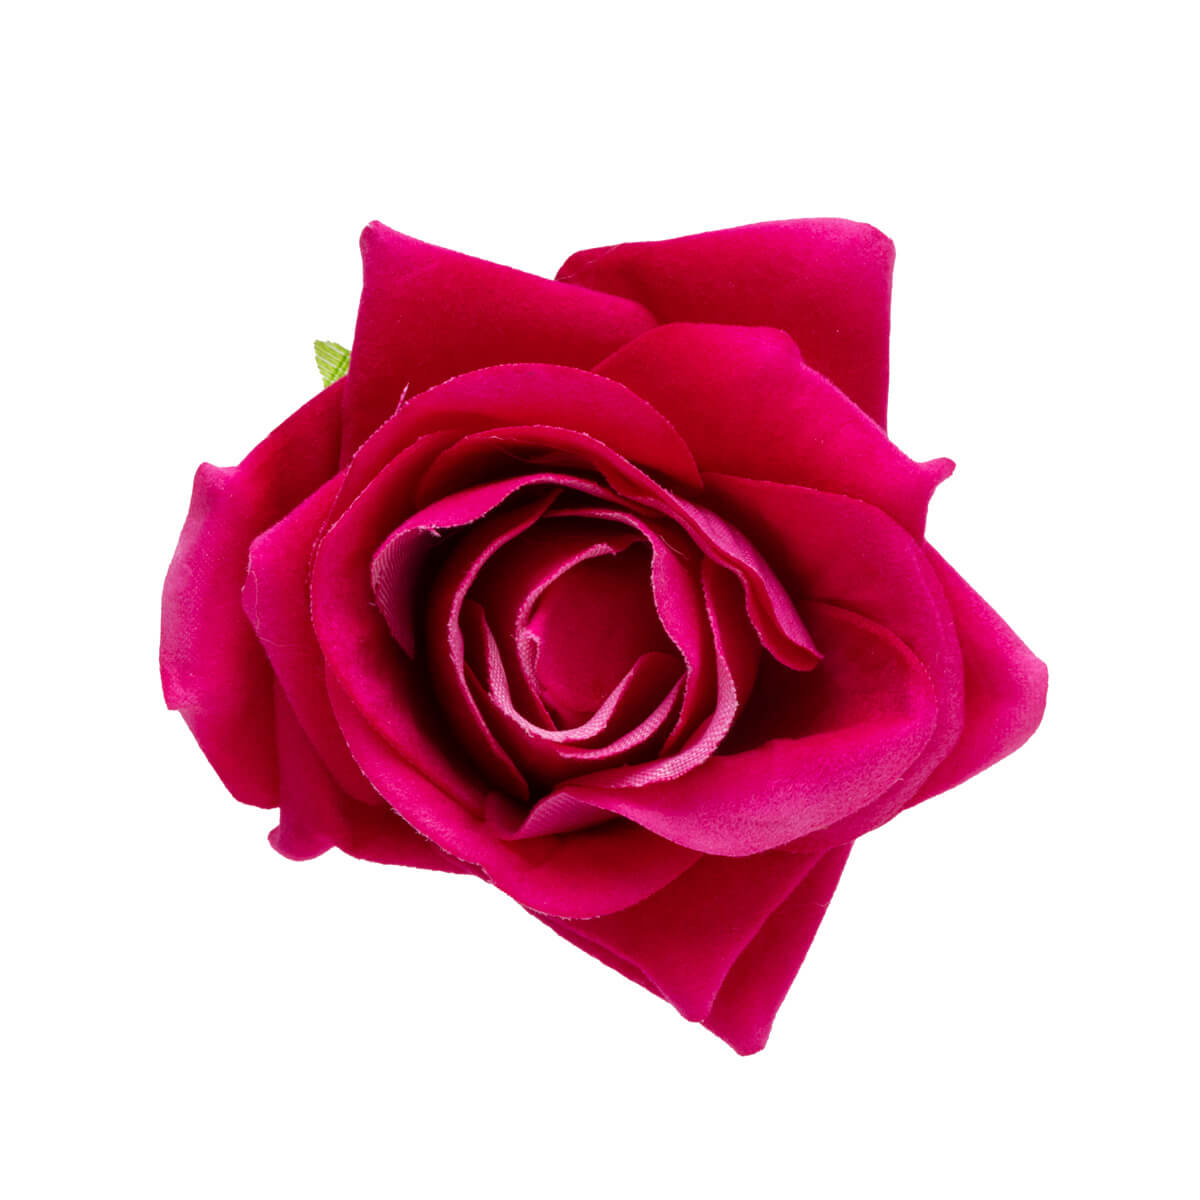 Graceful rose hair flower and costume flower 7,5cm